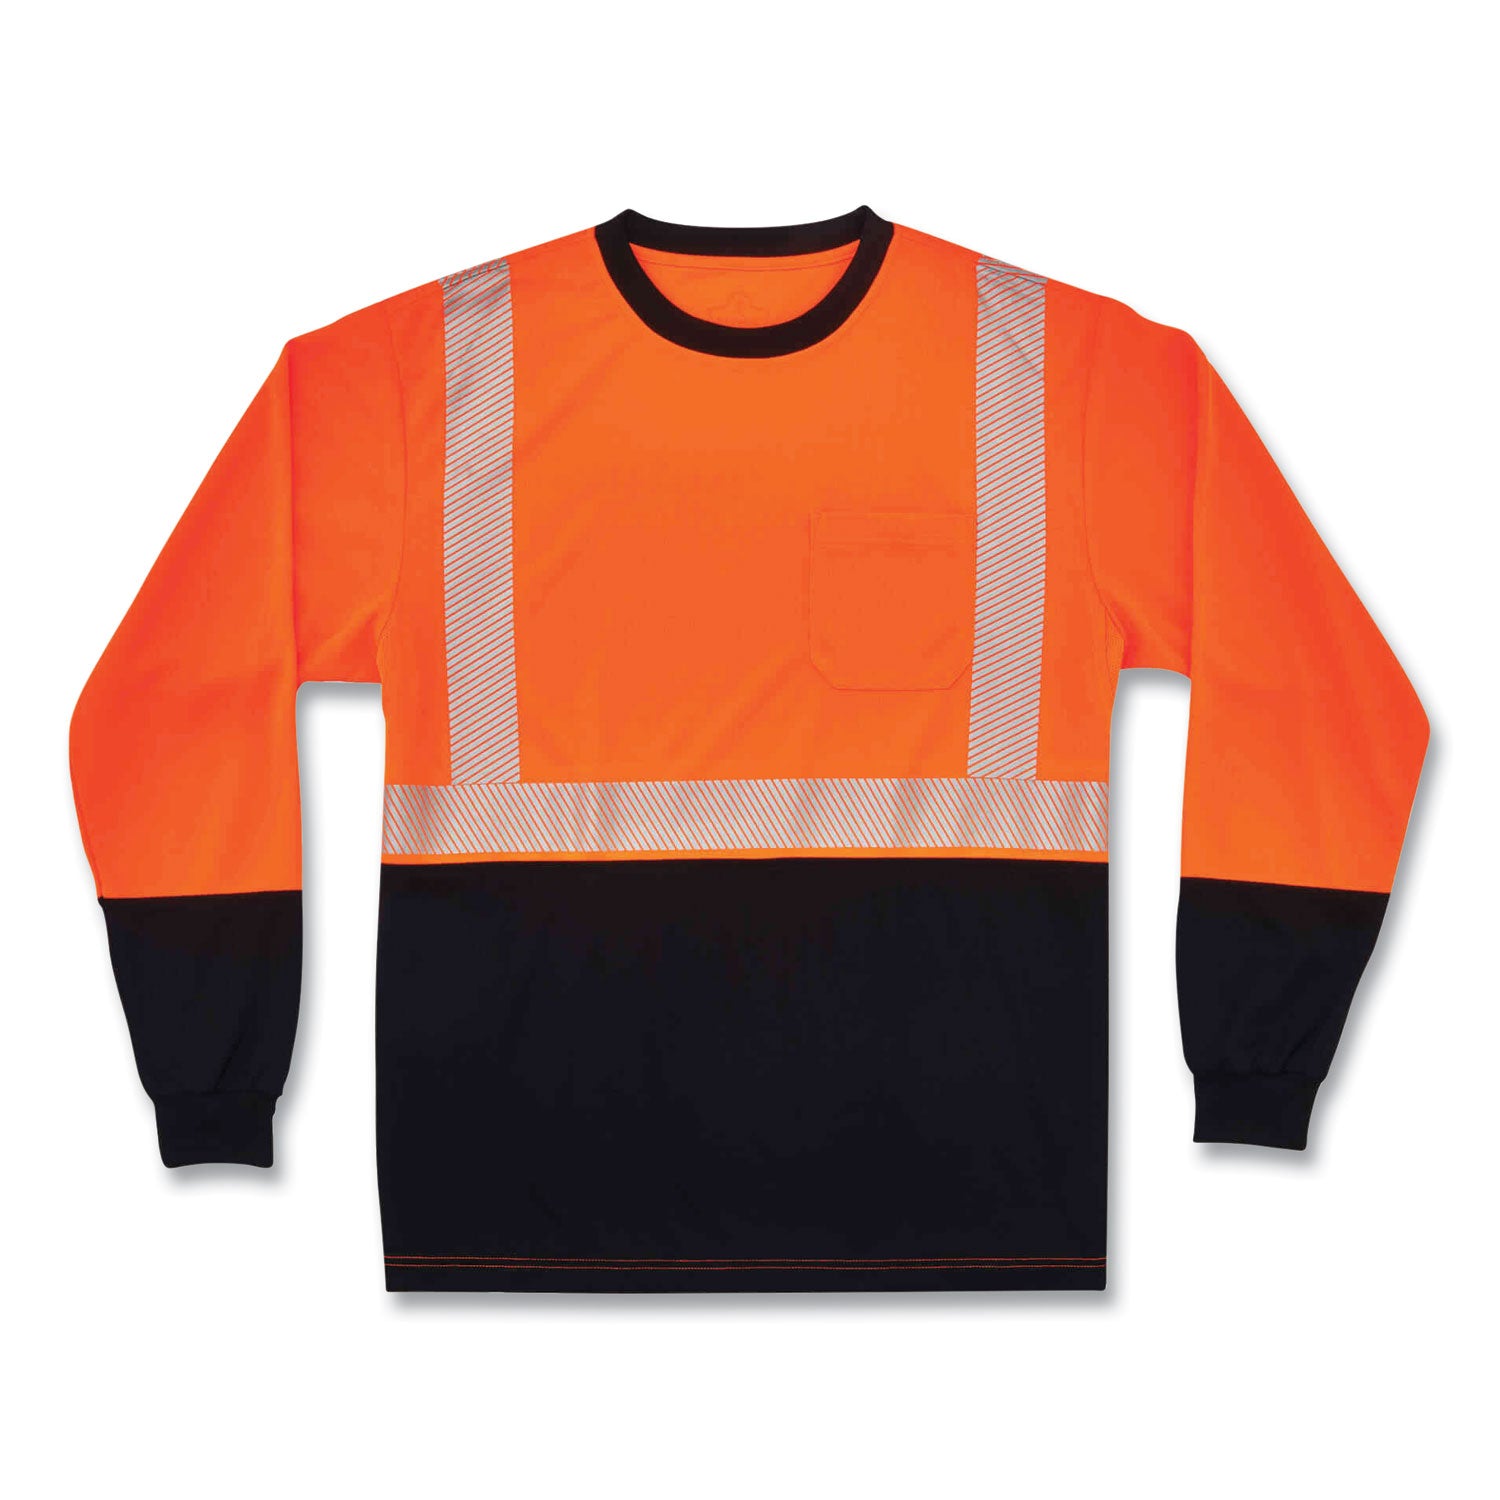 glowear-8281bk-class-2-long-sleeve-shirt-with-black-bottom-polyester-large-orange-ships-in-1-3-business-days_ego22684 - 1